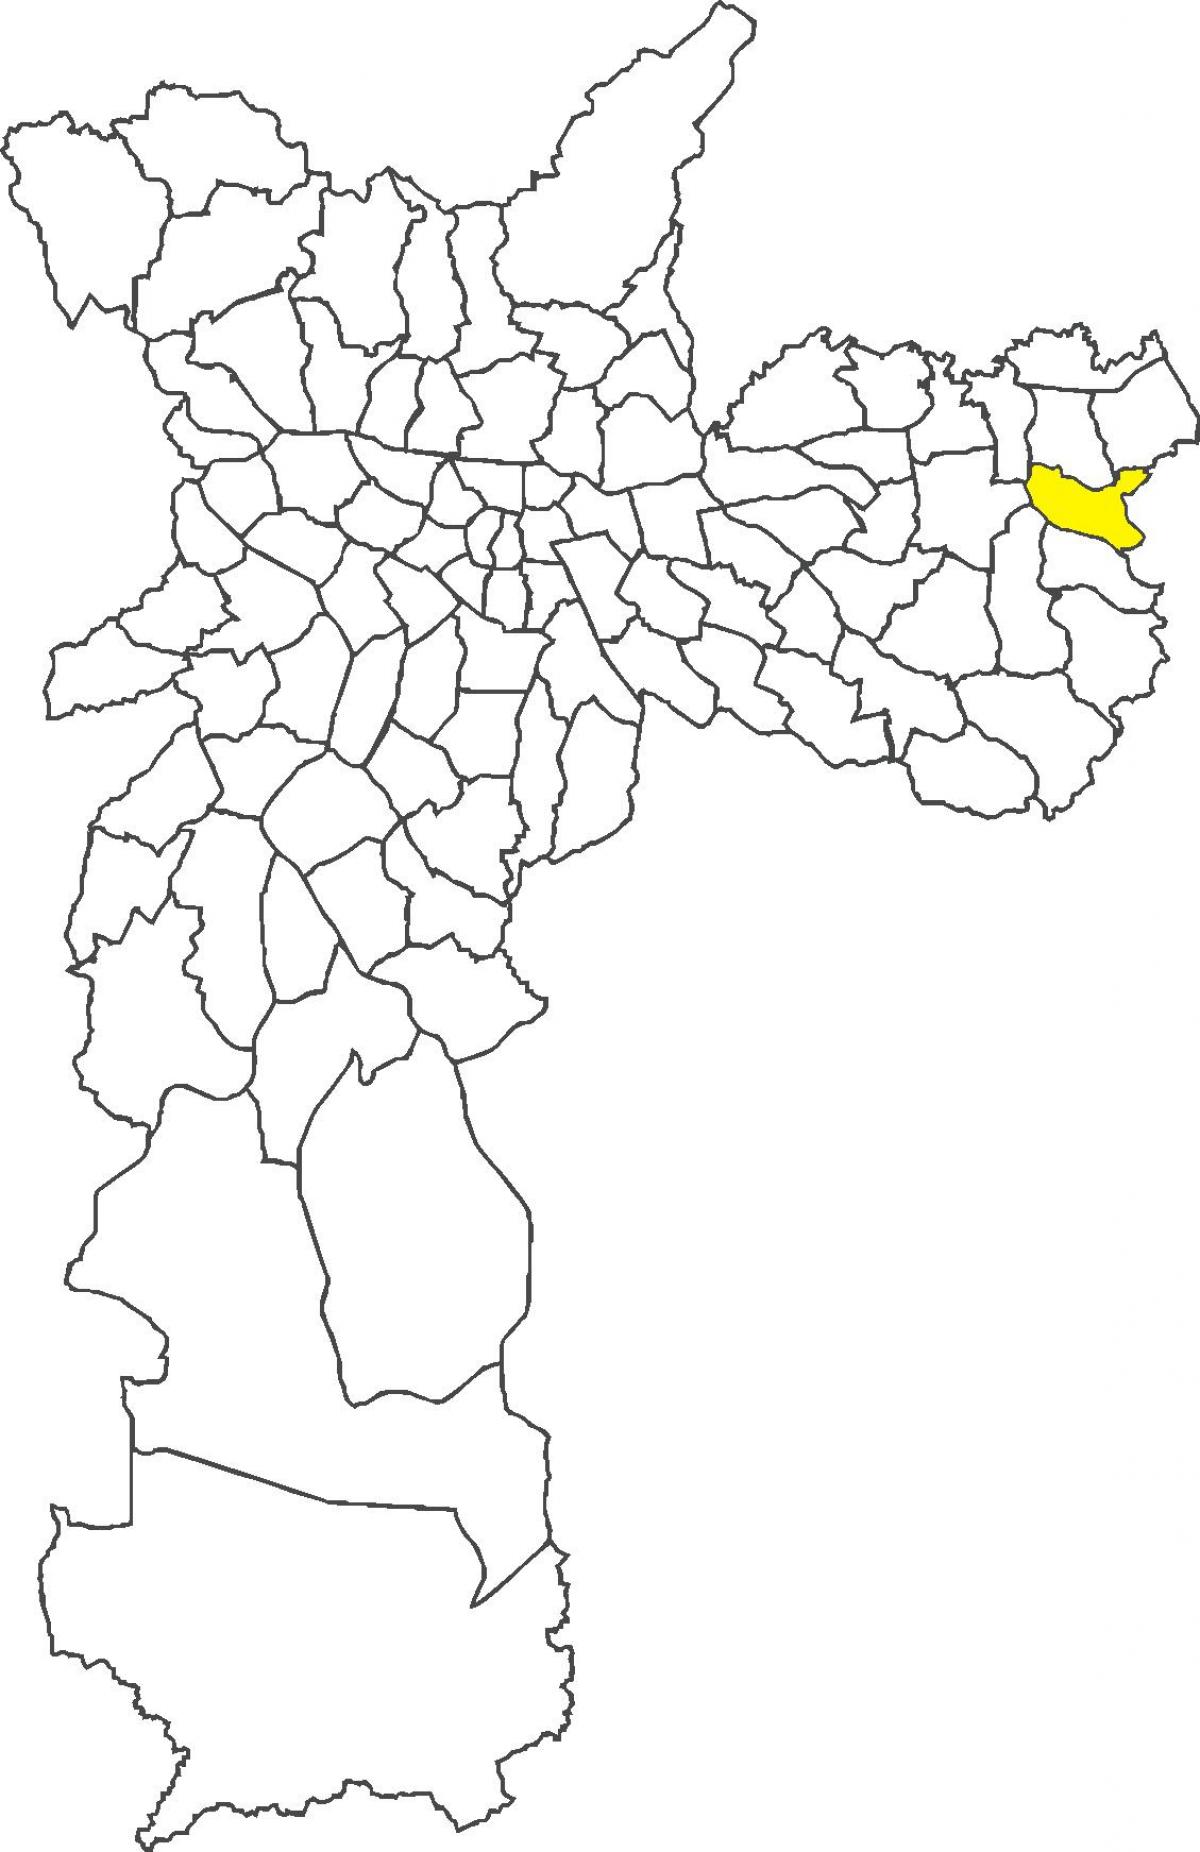 Kart over distriktet Lajeado